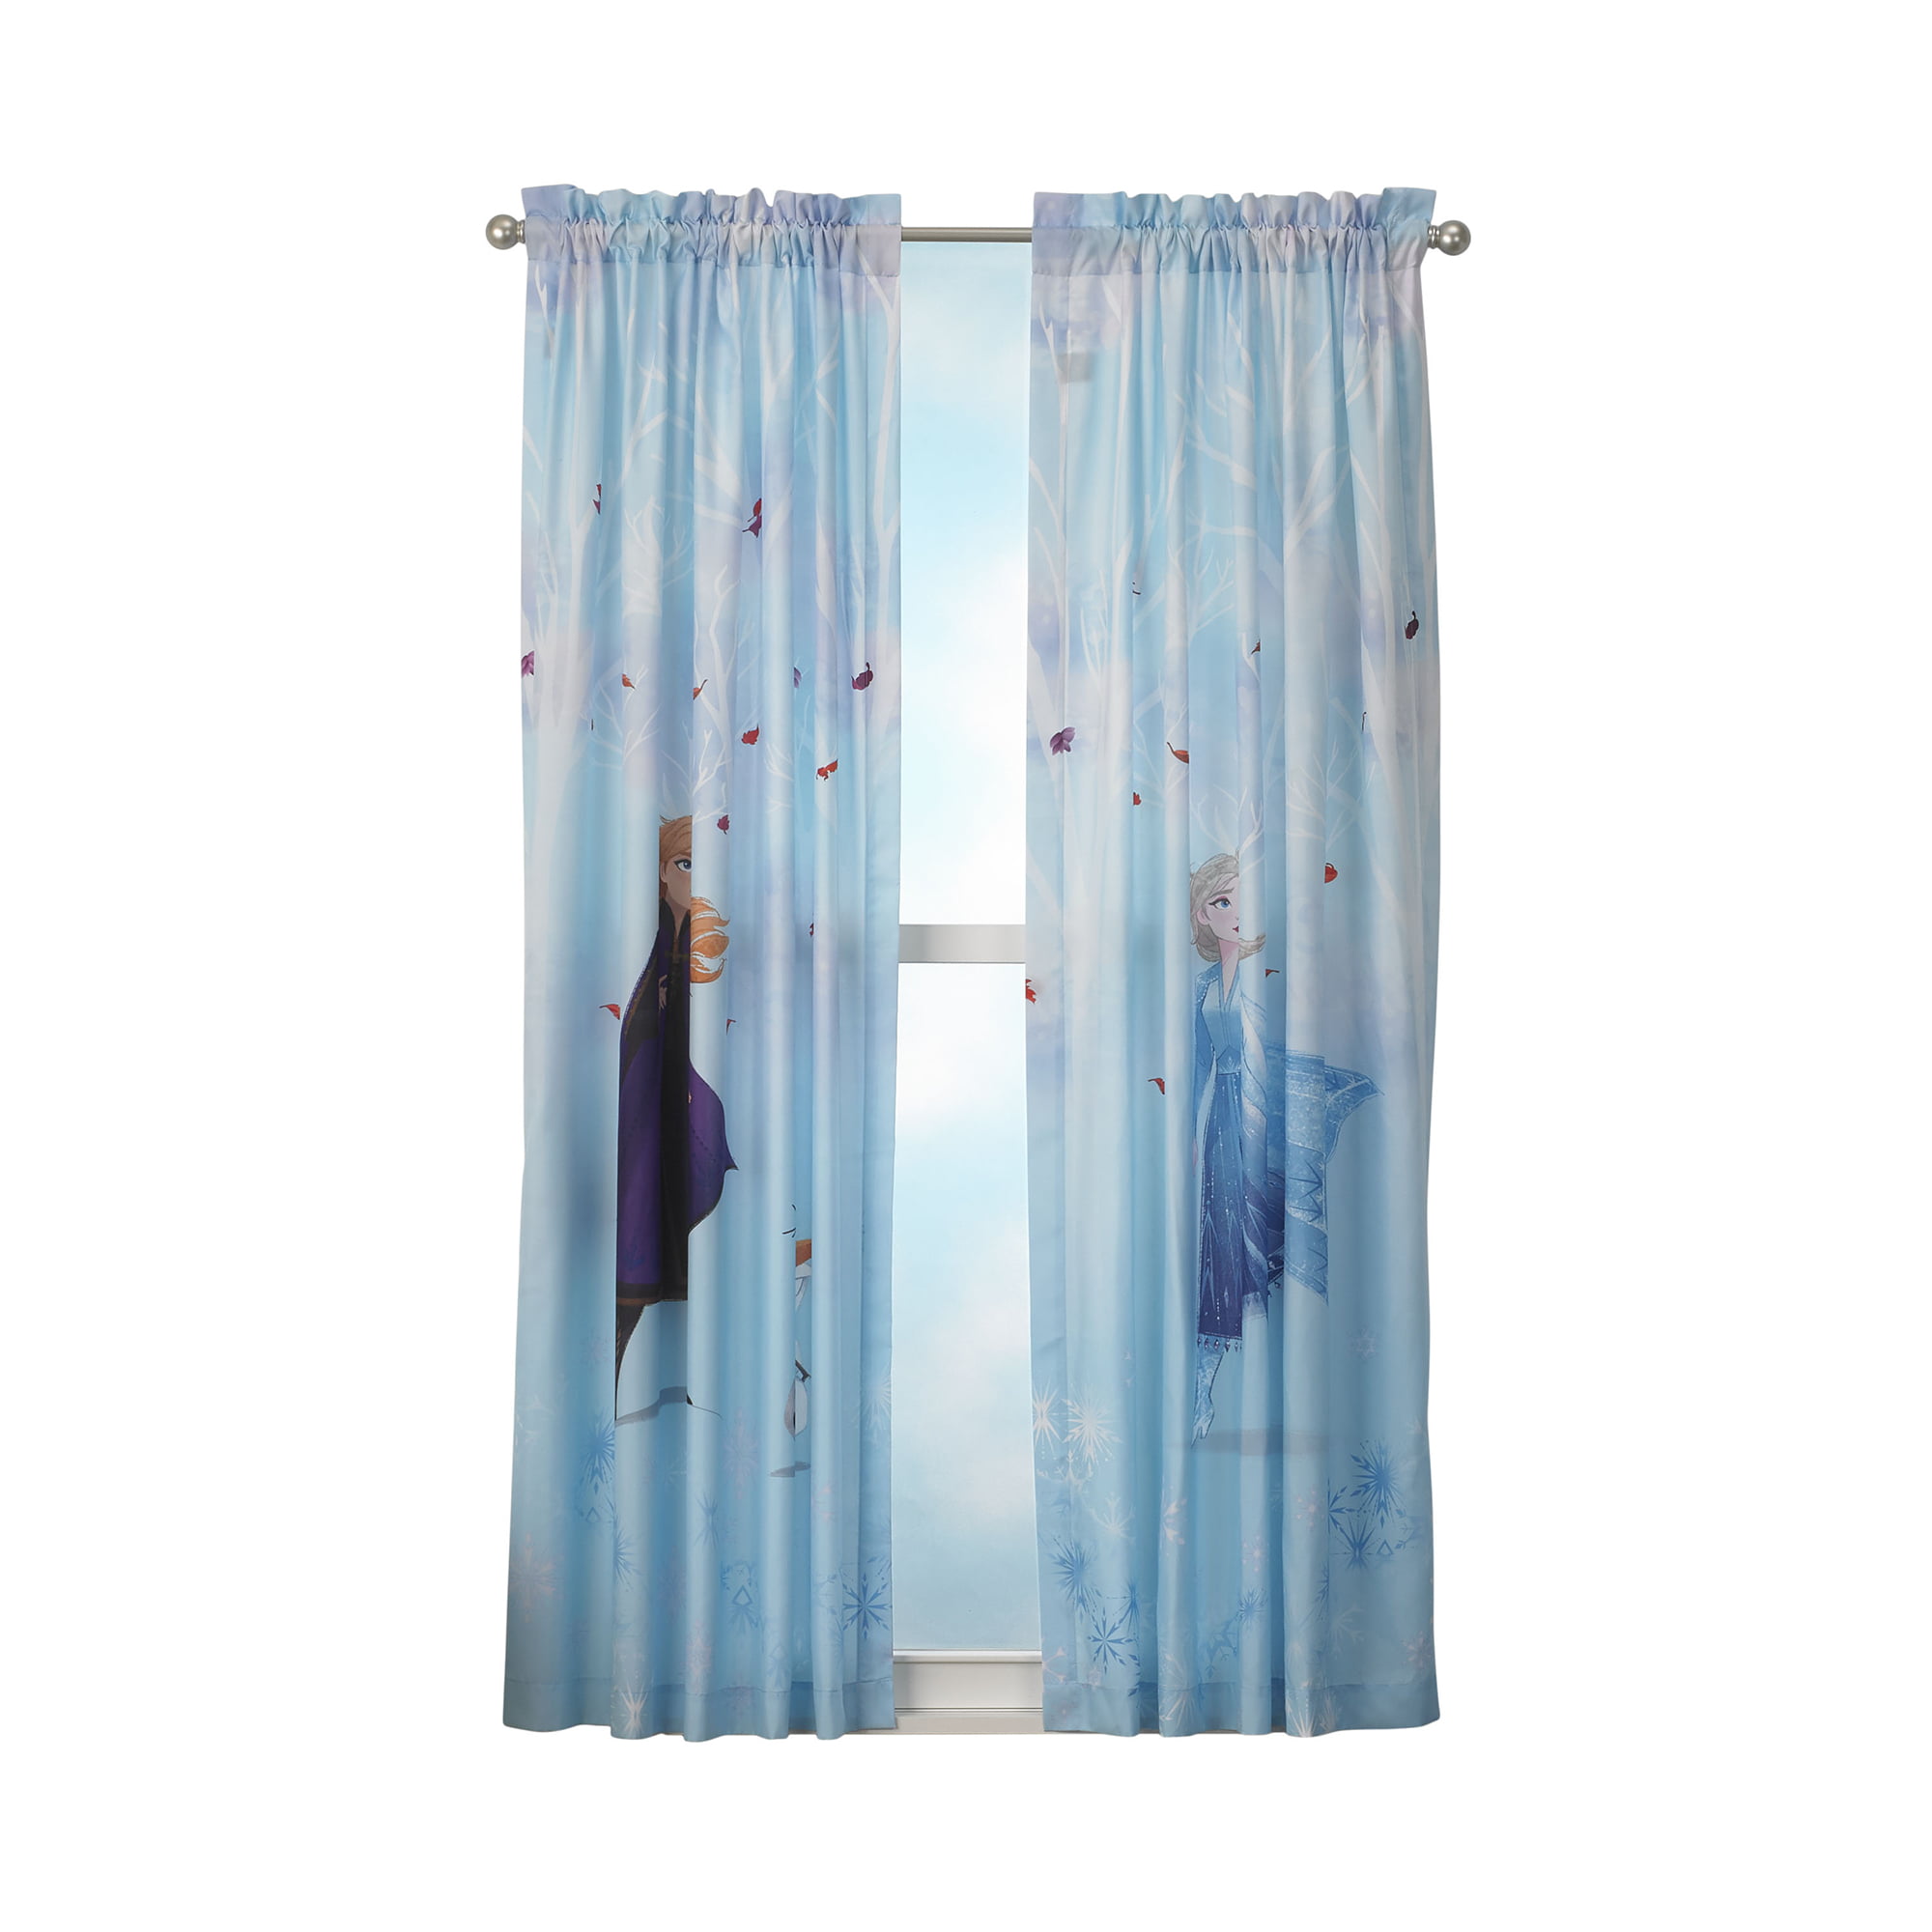 Disney Frozen Kids Bedroom Window Curtains 2 Panel Set 63inch Length Blue Com